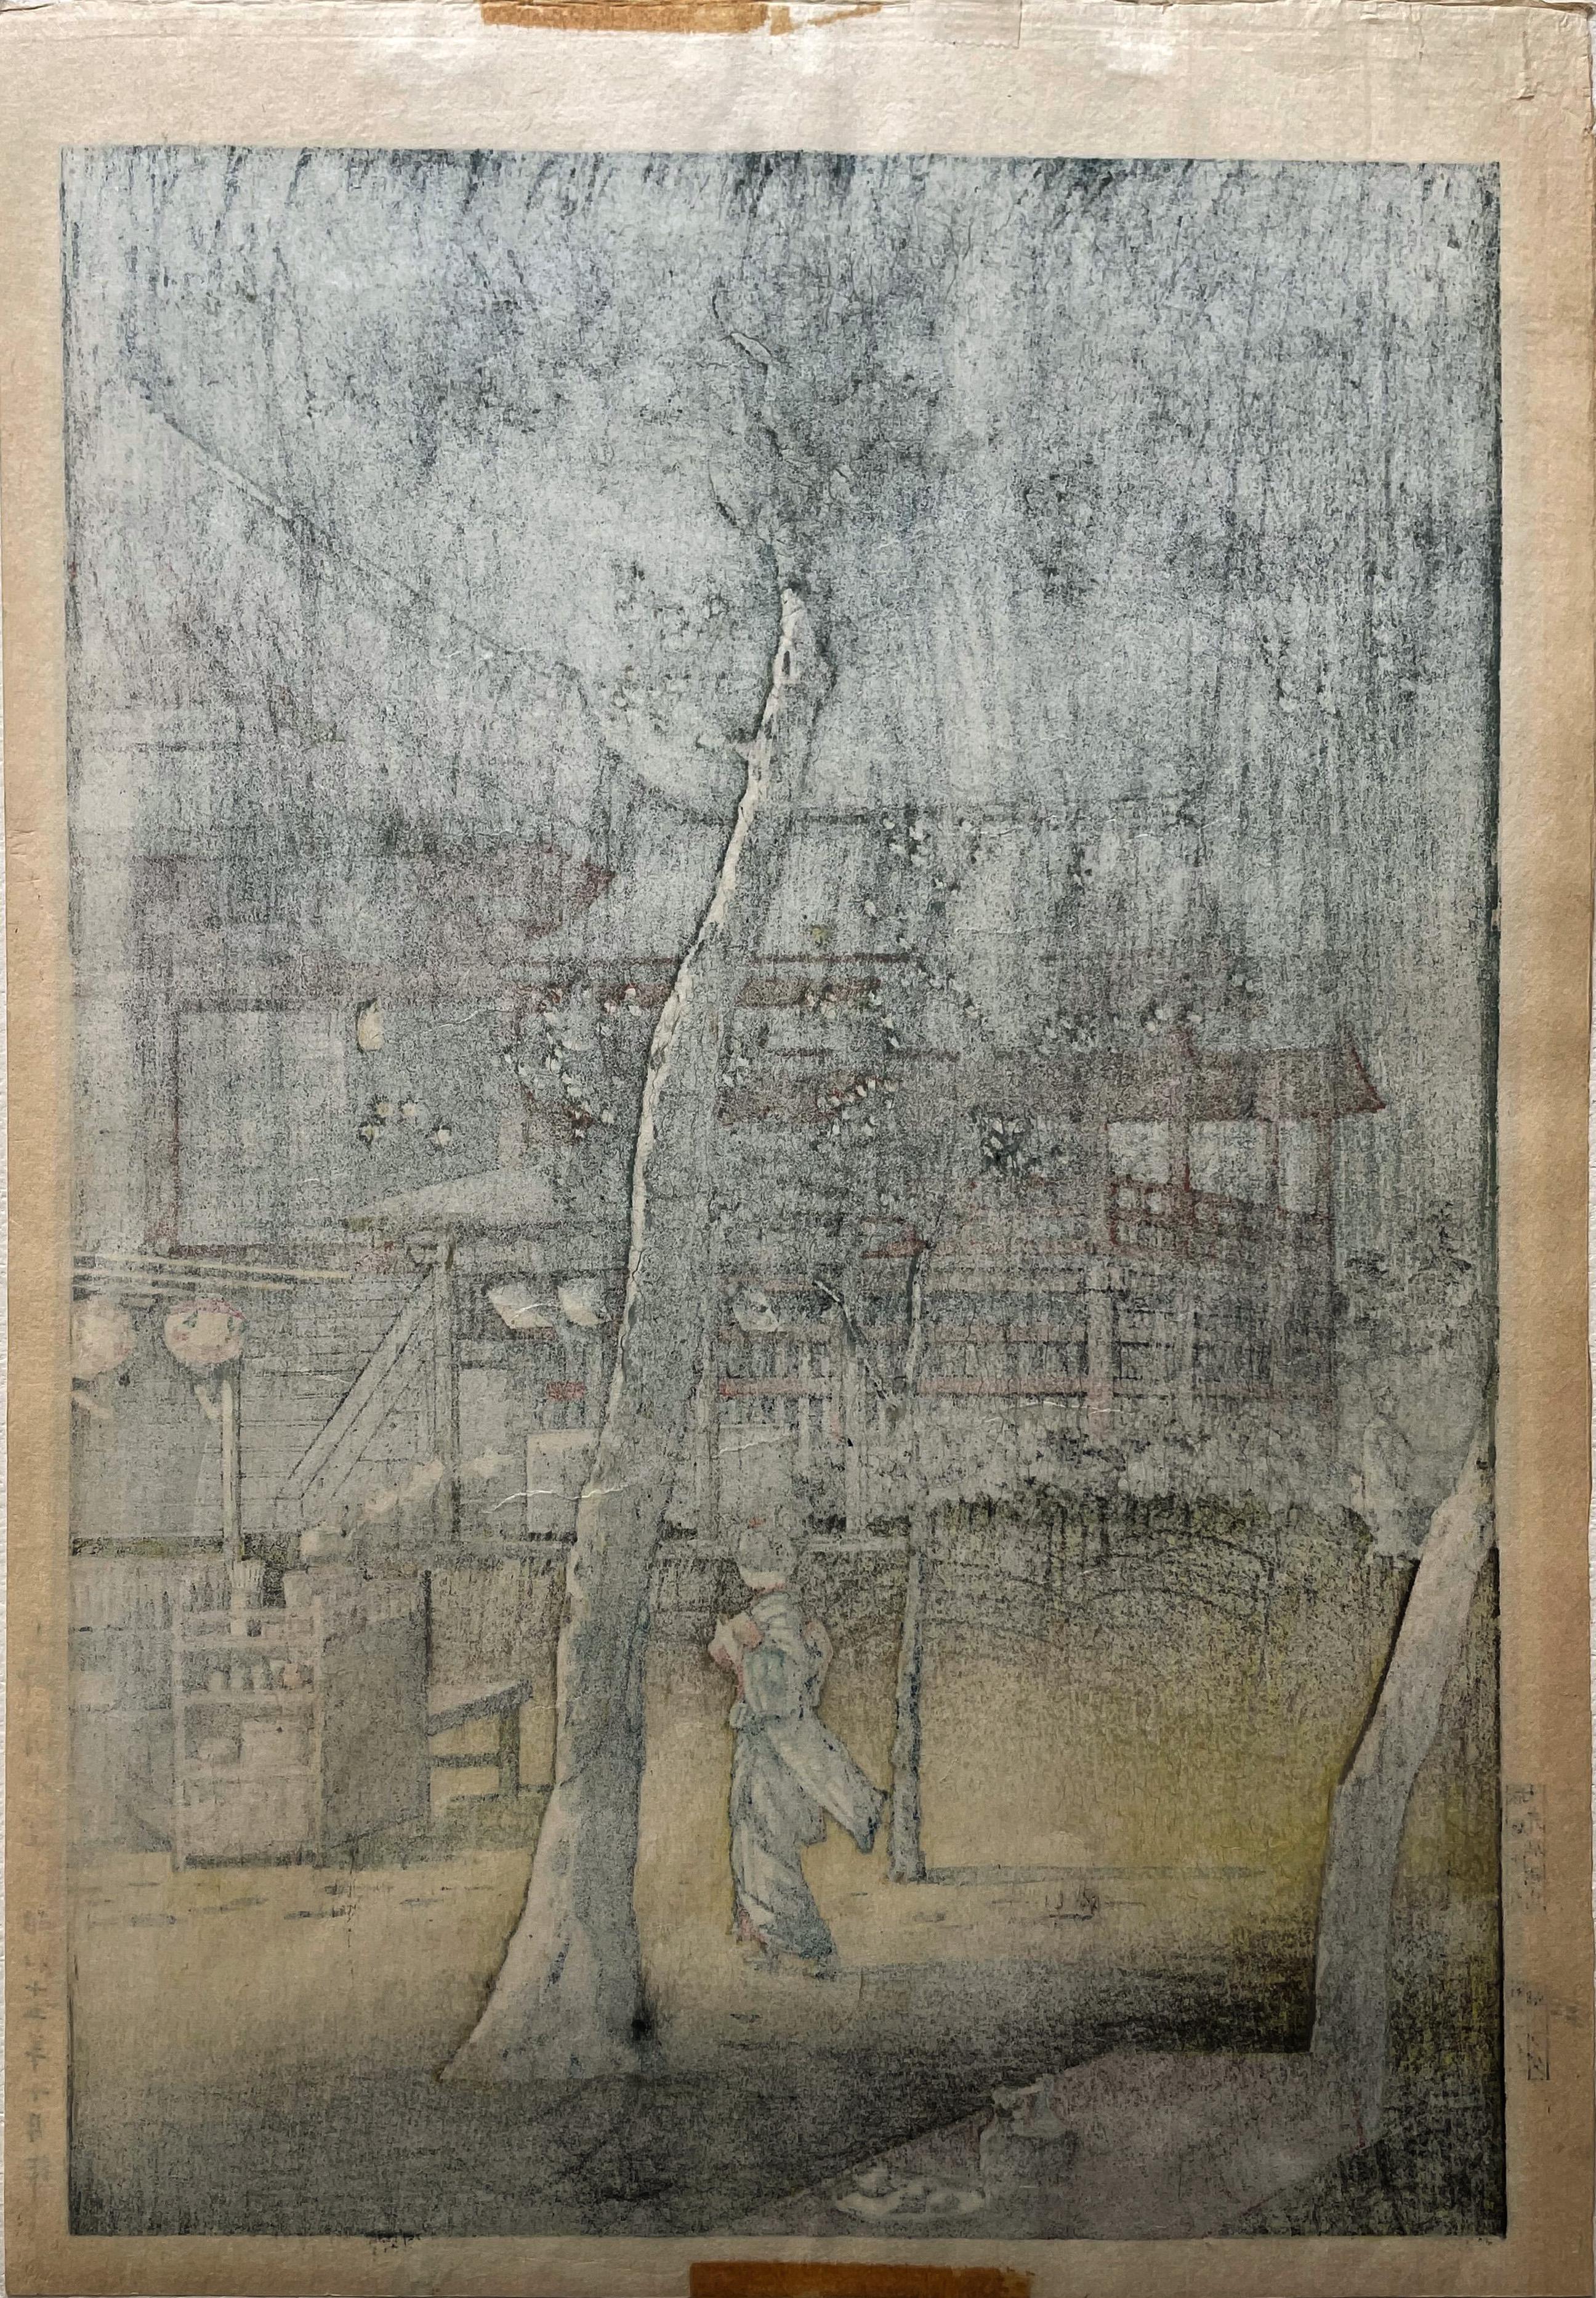 Tea Shop at Kiyomizu (Early Printing) - Nocturnal Woodblock Print on Paper 12